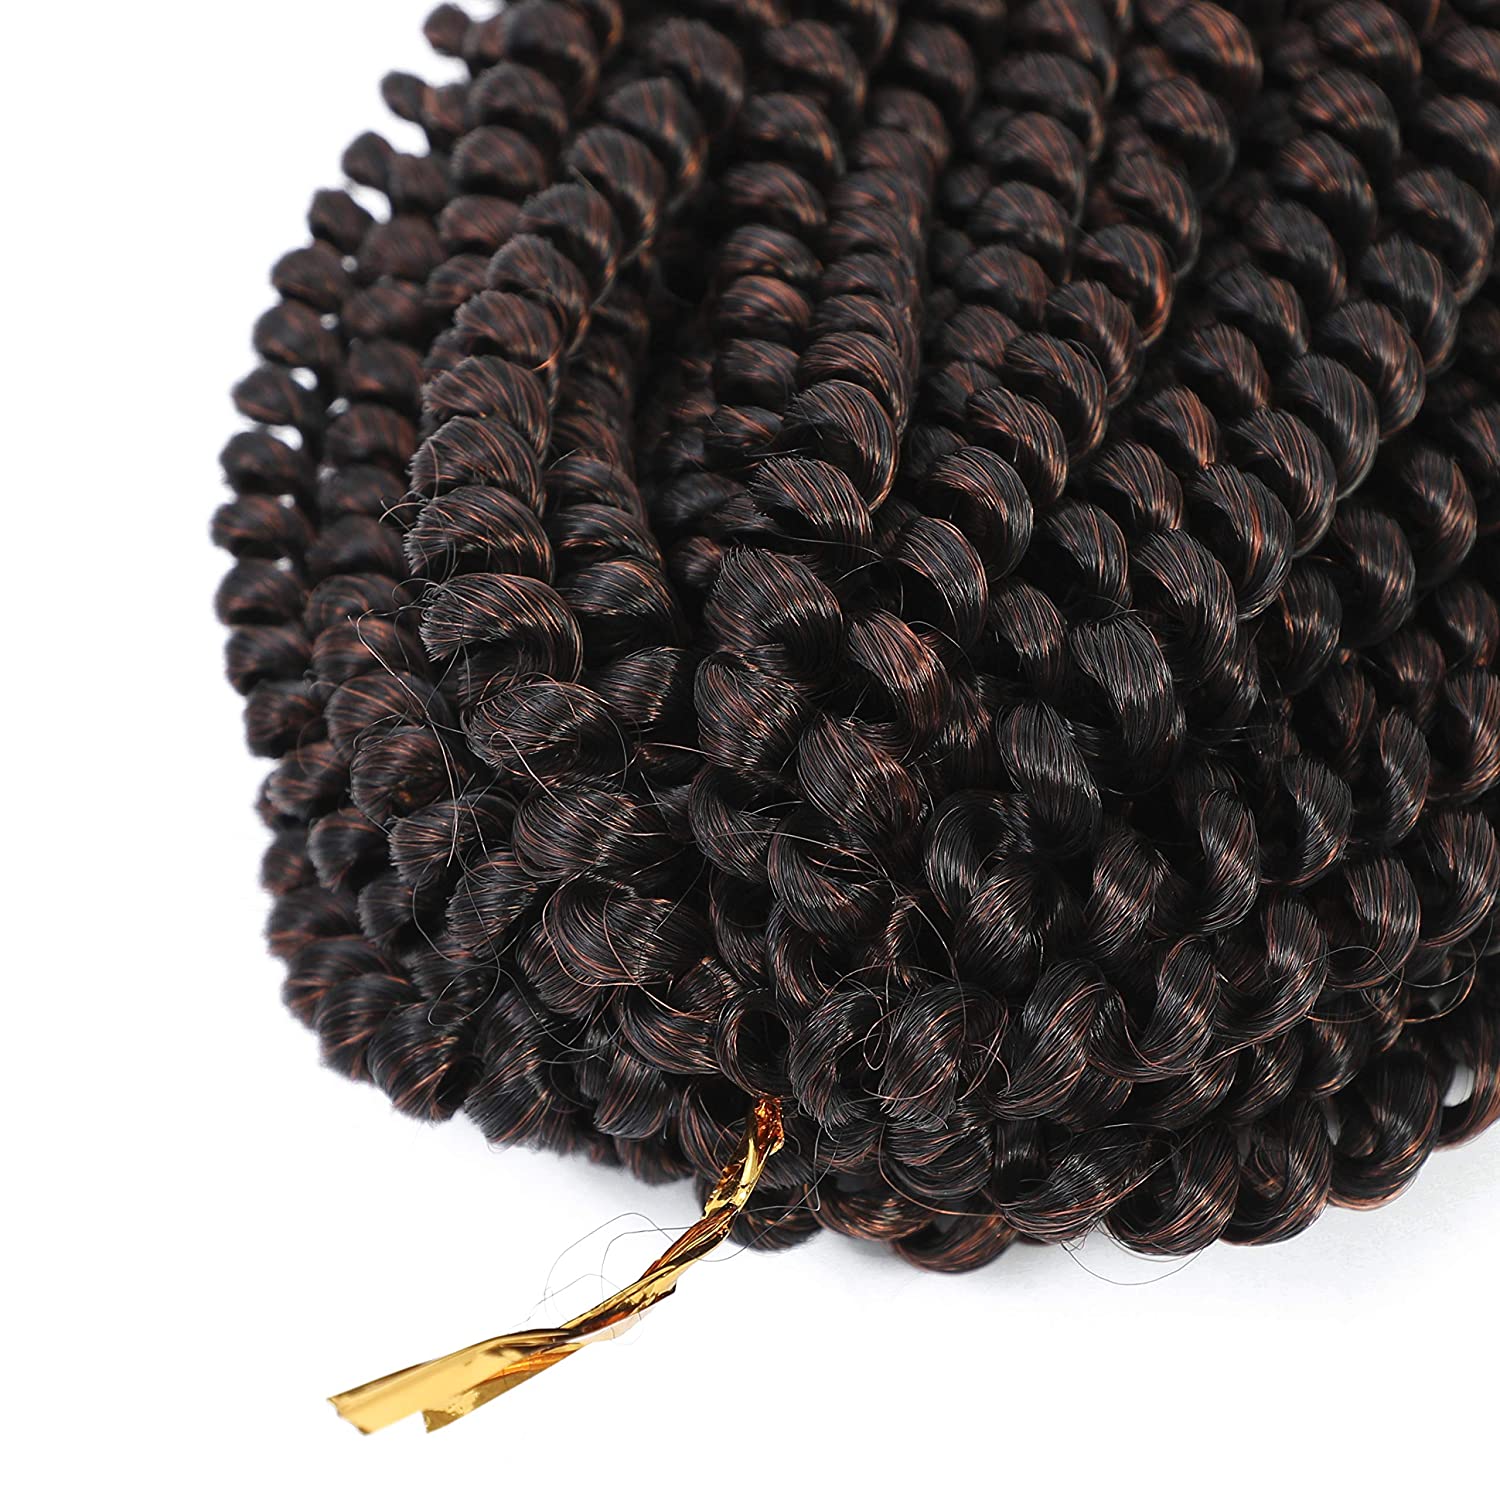 Spring Twist Crochet Braids Hair 6 Packs 8inch - #T350